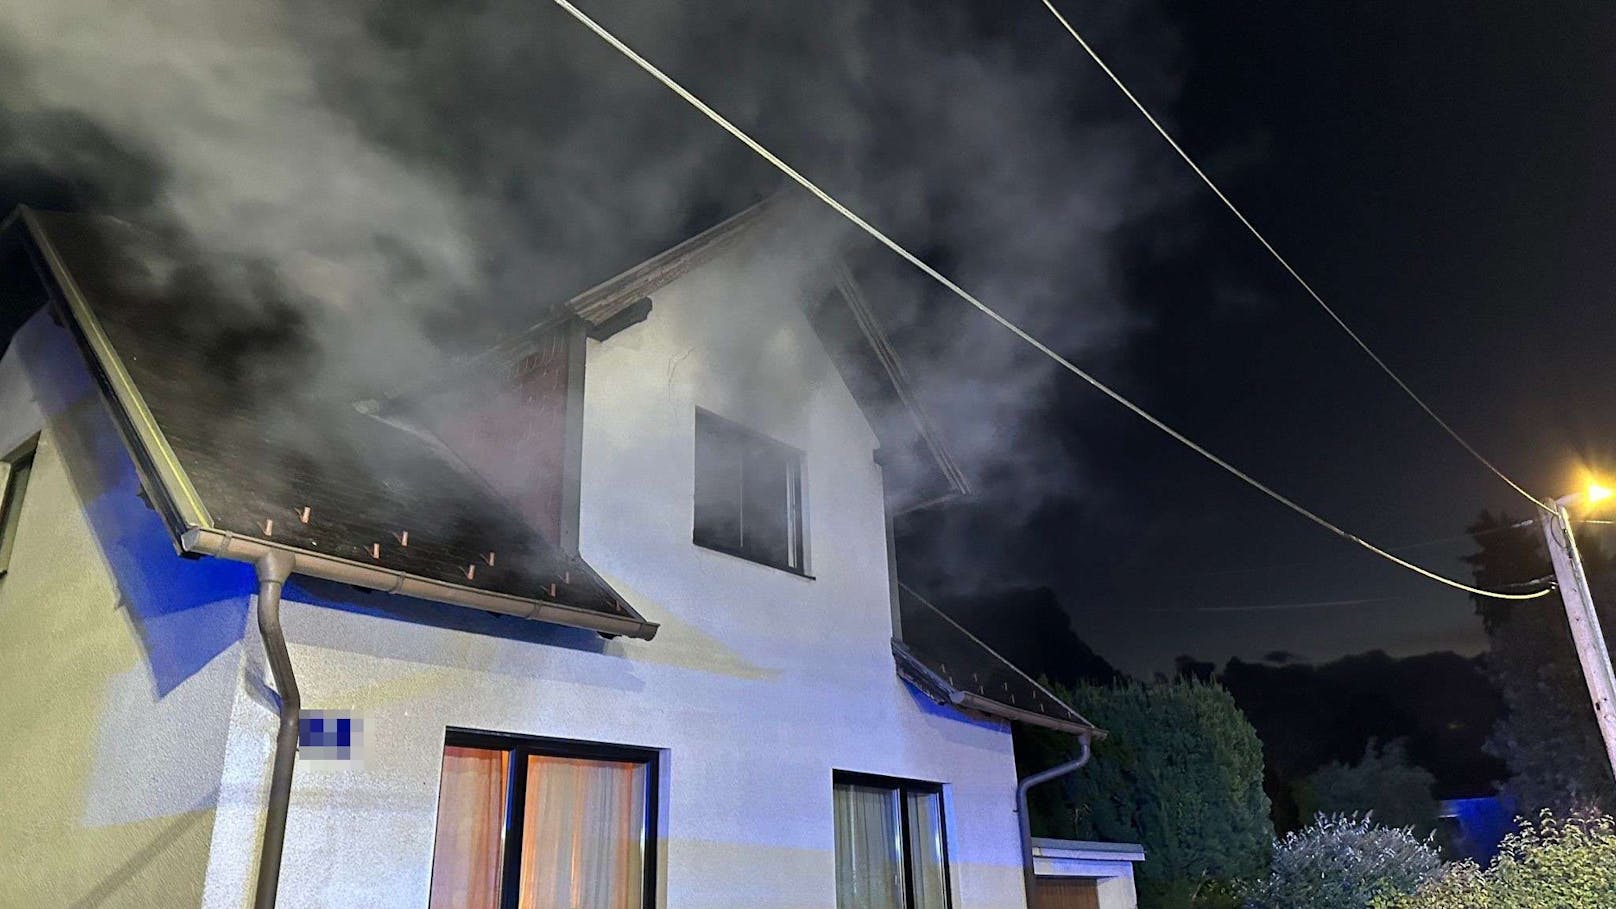 Mann rettete betagte Frau aus brennendem Haus